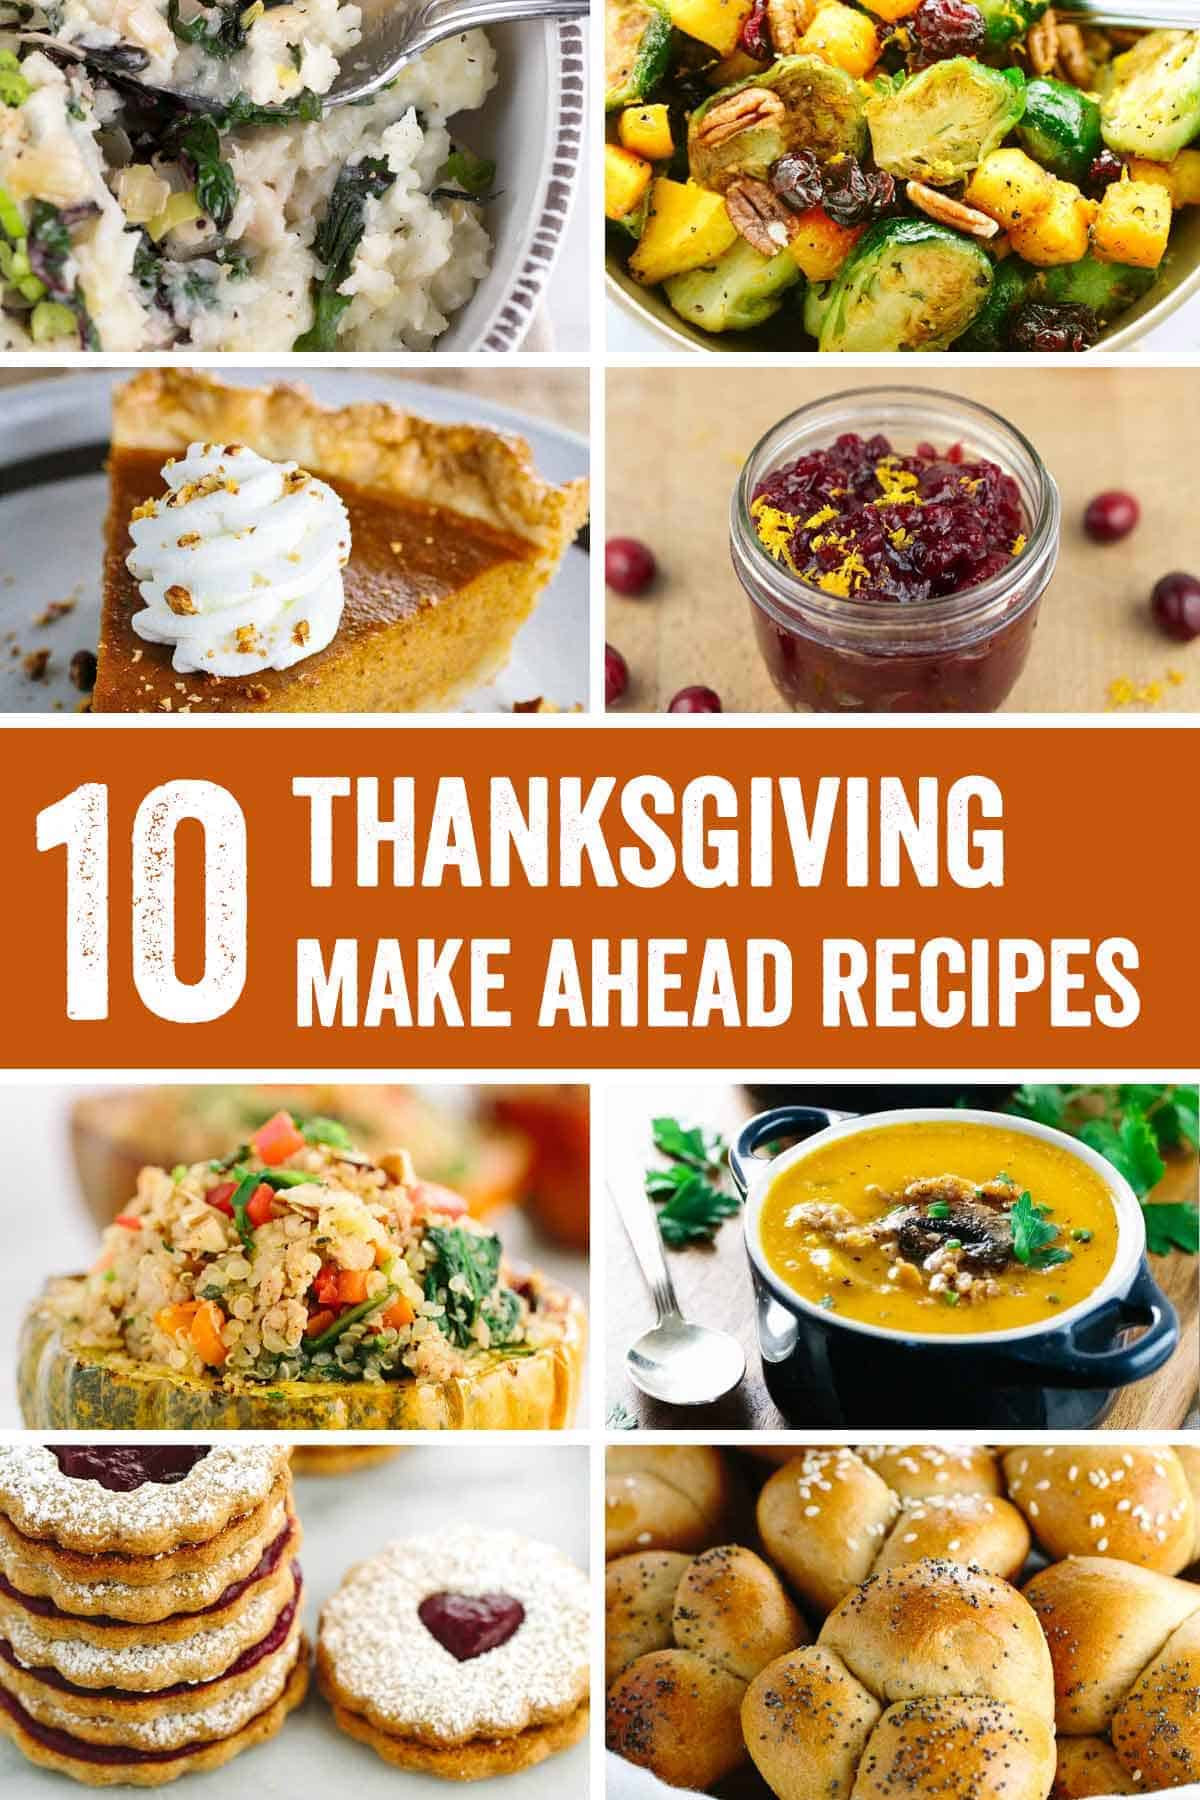 Make Ahead Thanksgiving Recipes
 Roundup 10 Thanksgiving Make Ahead Recipes